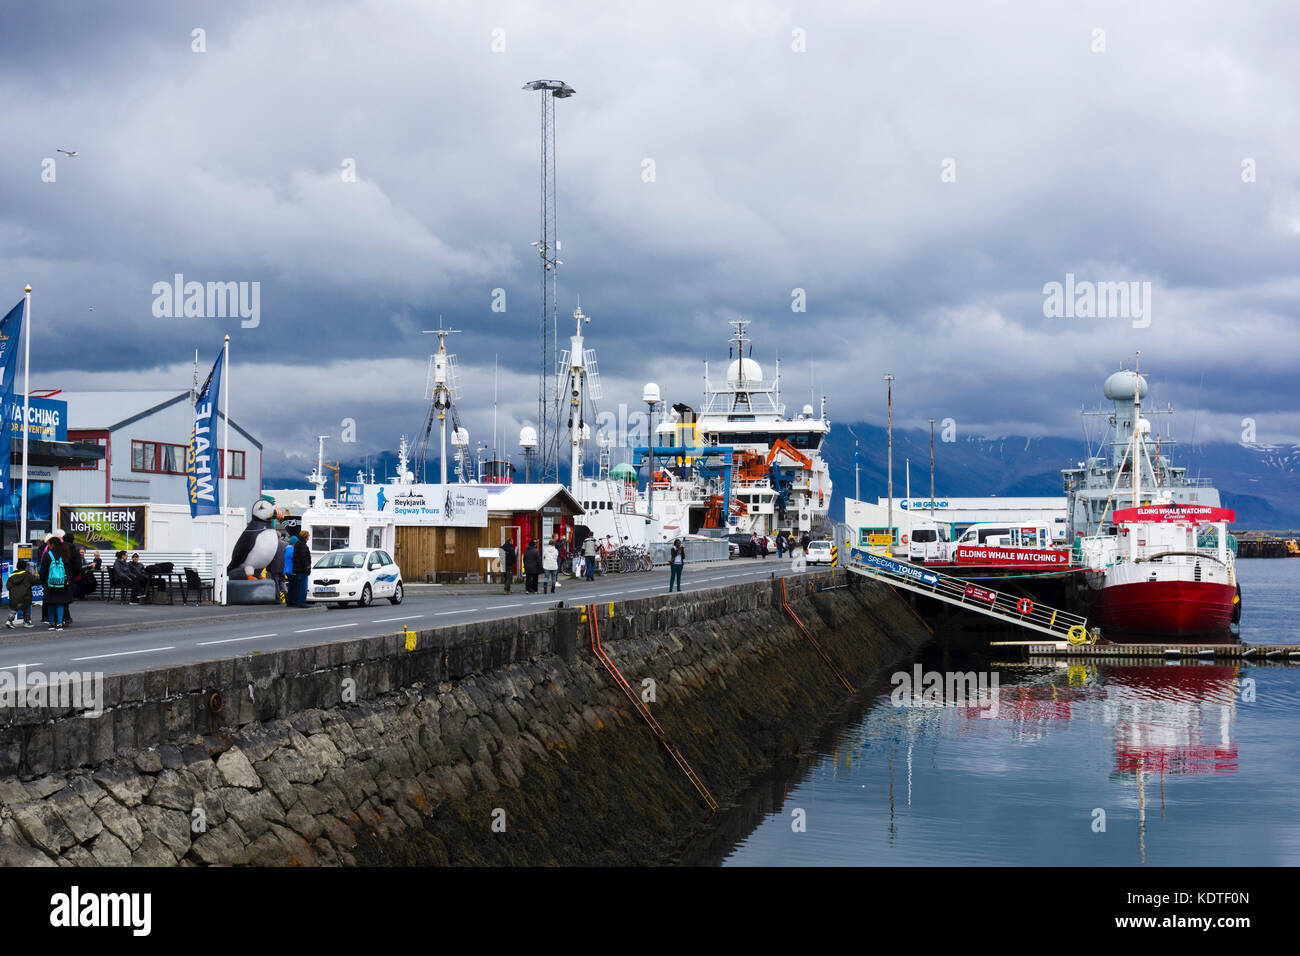 Old Harbour, Reykjavik, Iceland Stock Photo